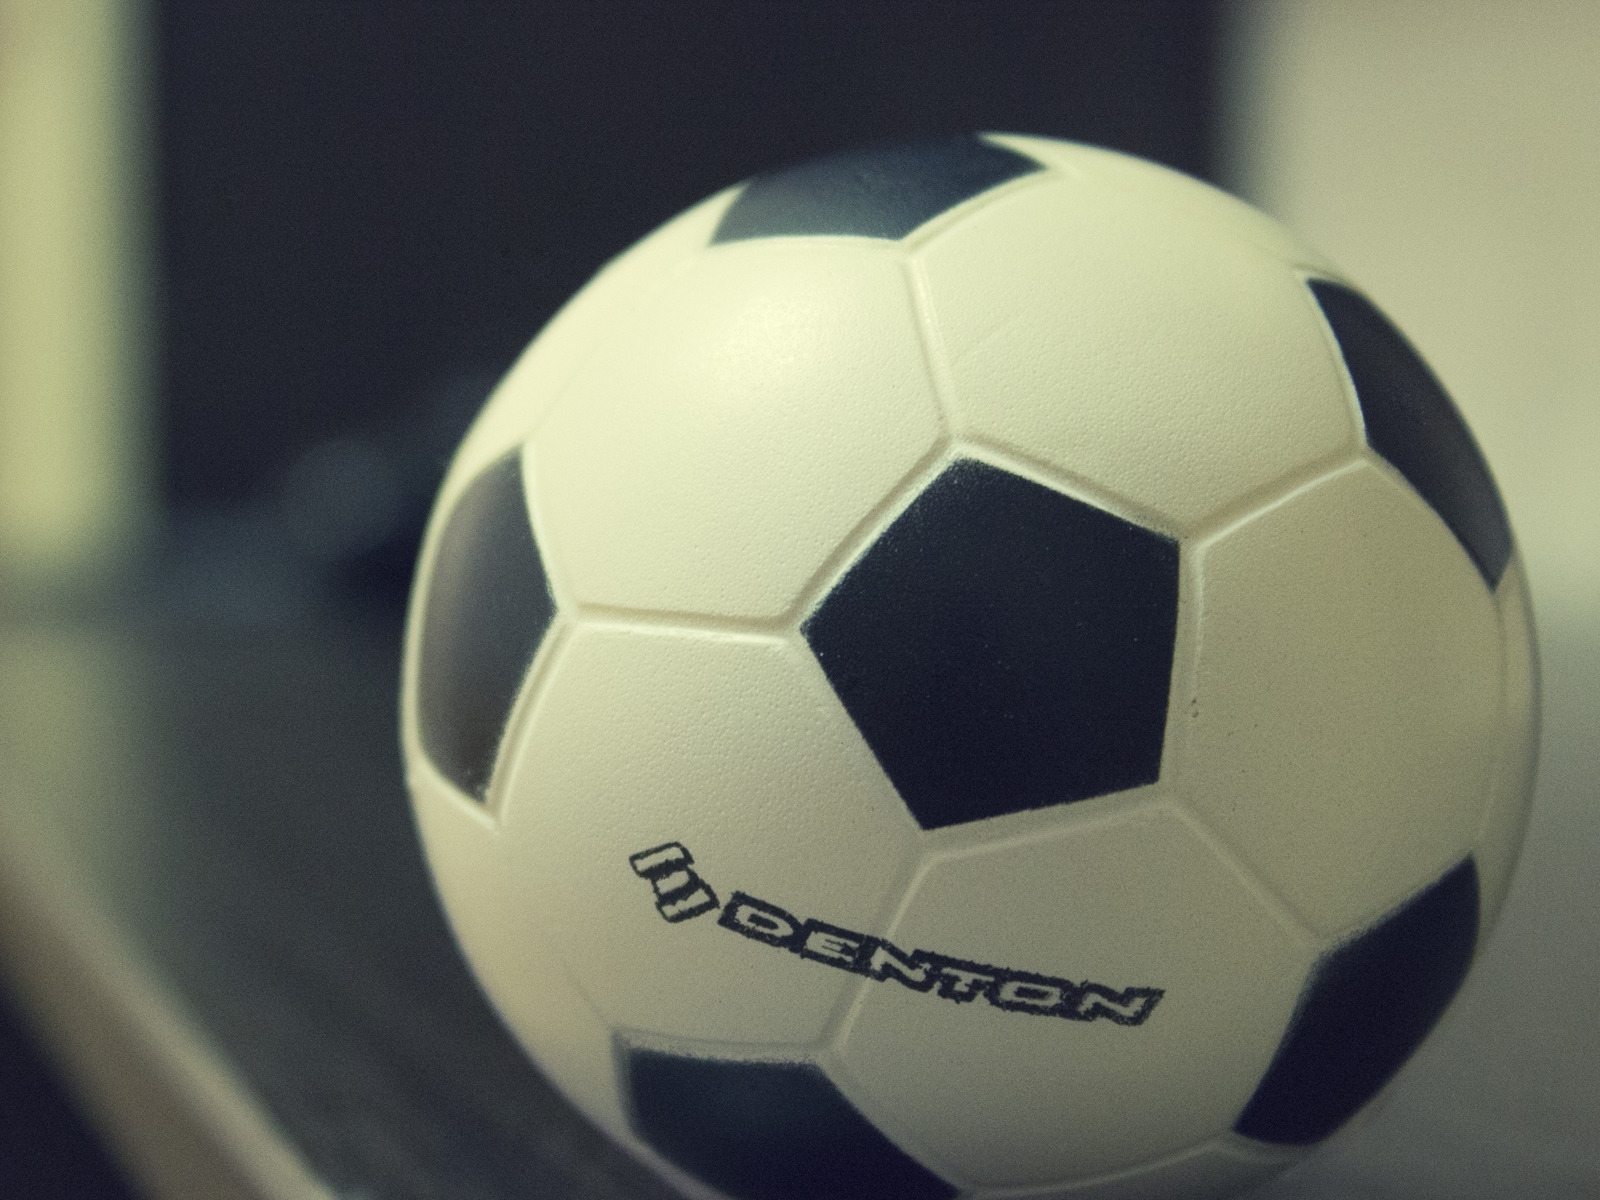 Denton Soccer Ball for 1600 x 1200 resolution